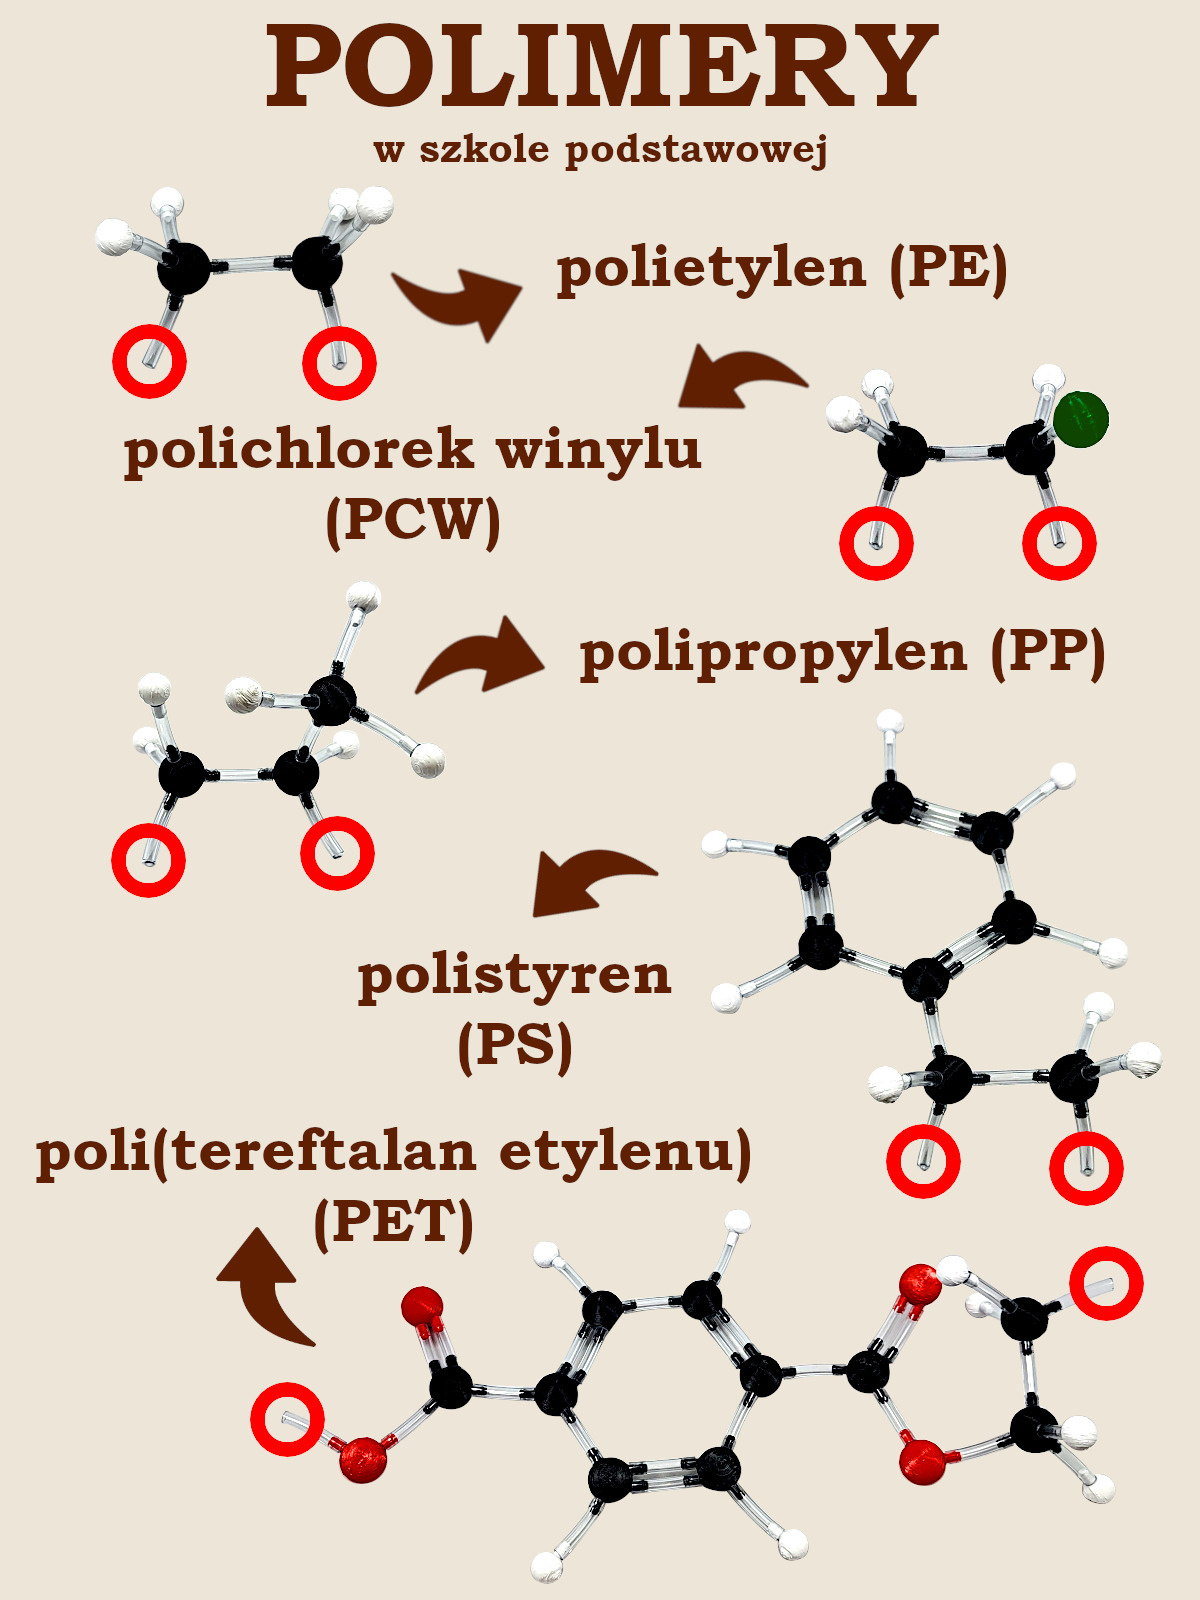 polimery